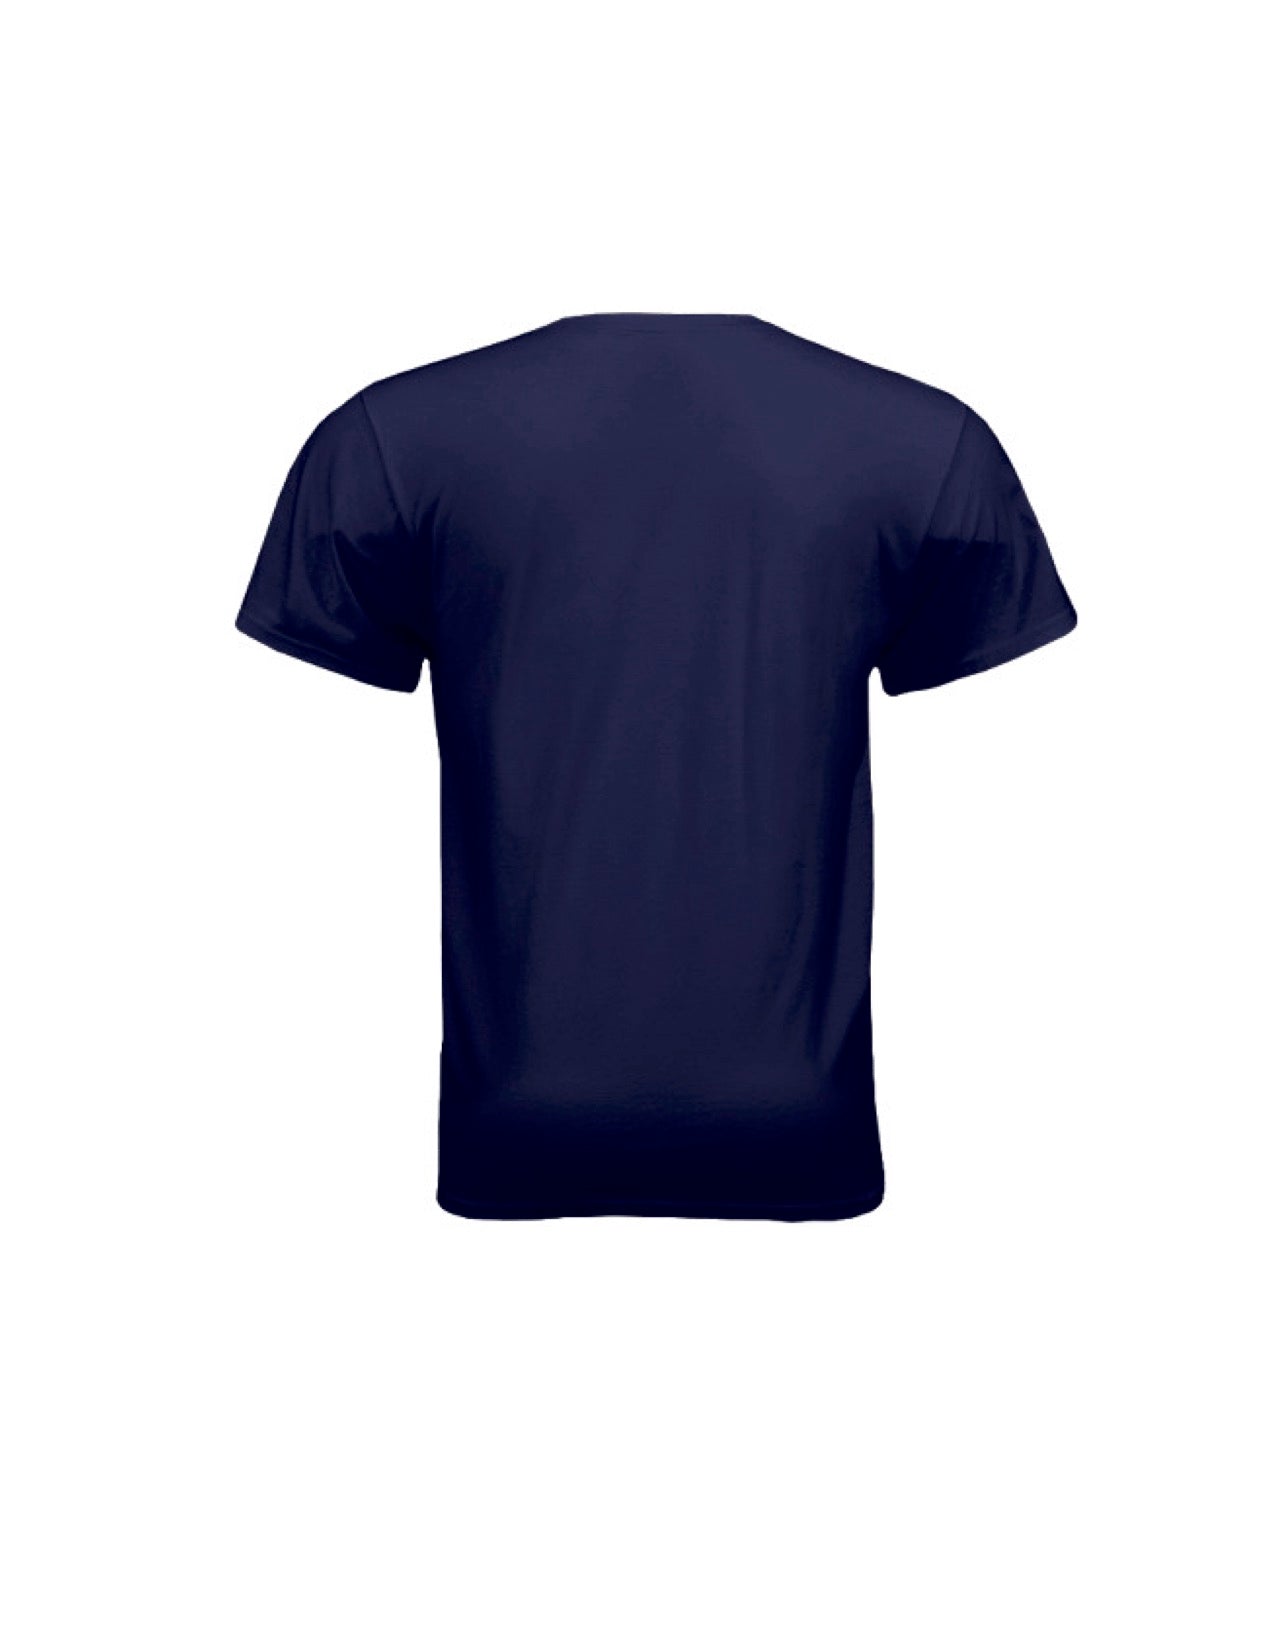 Practice Shirt - Blue